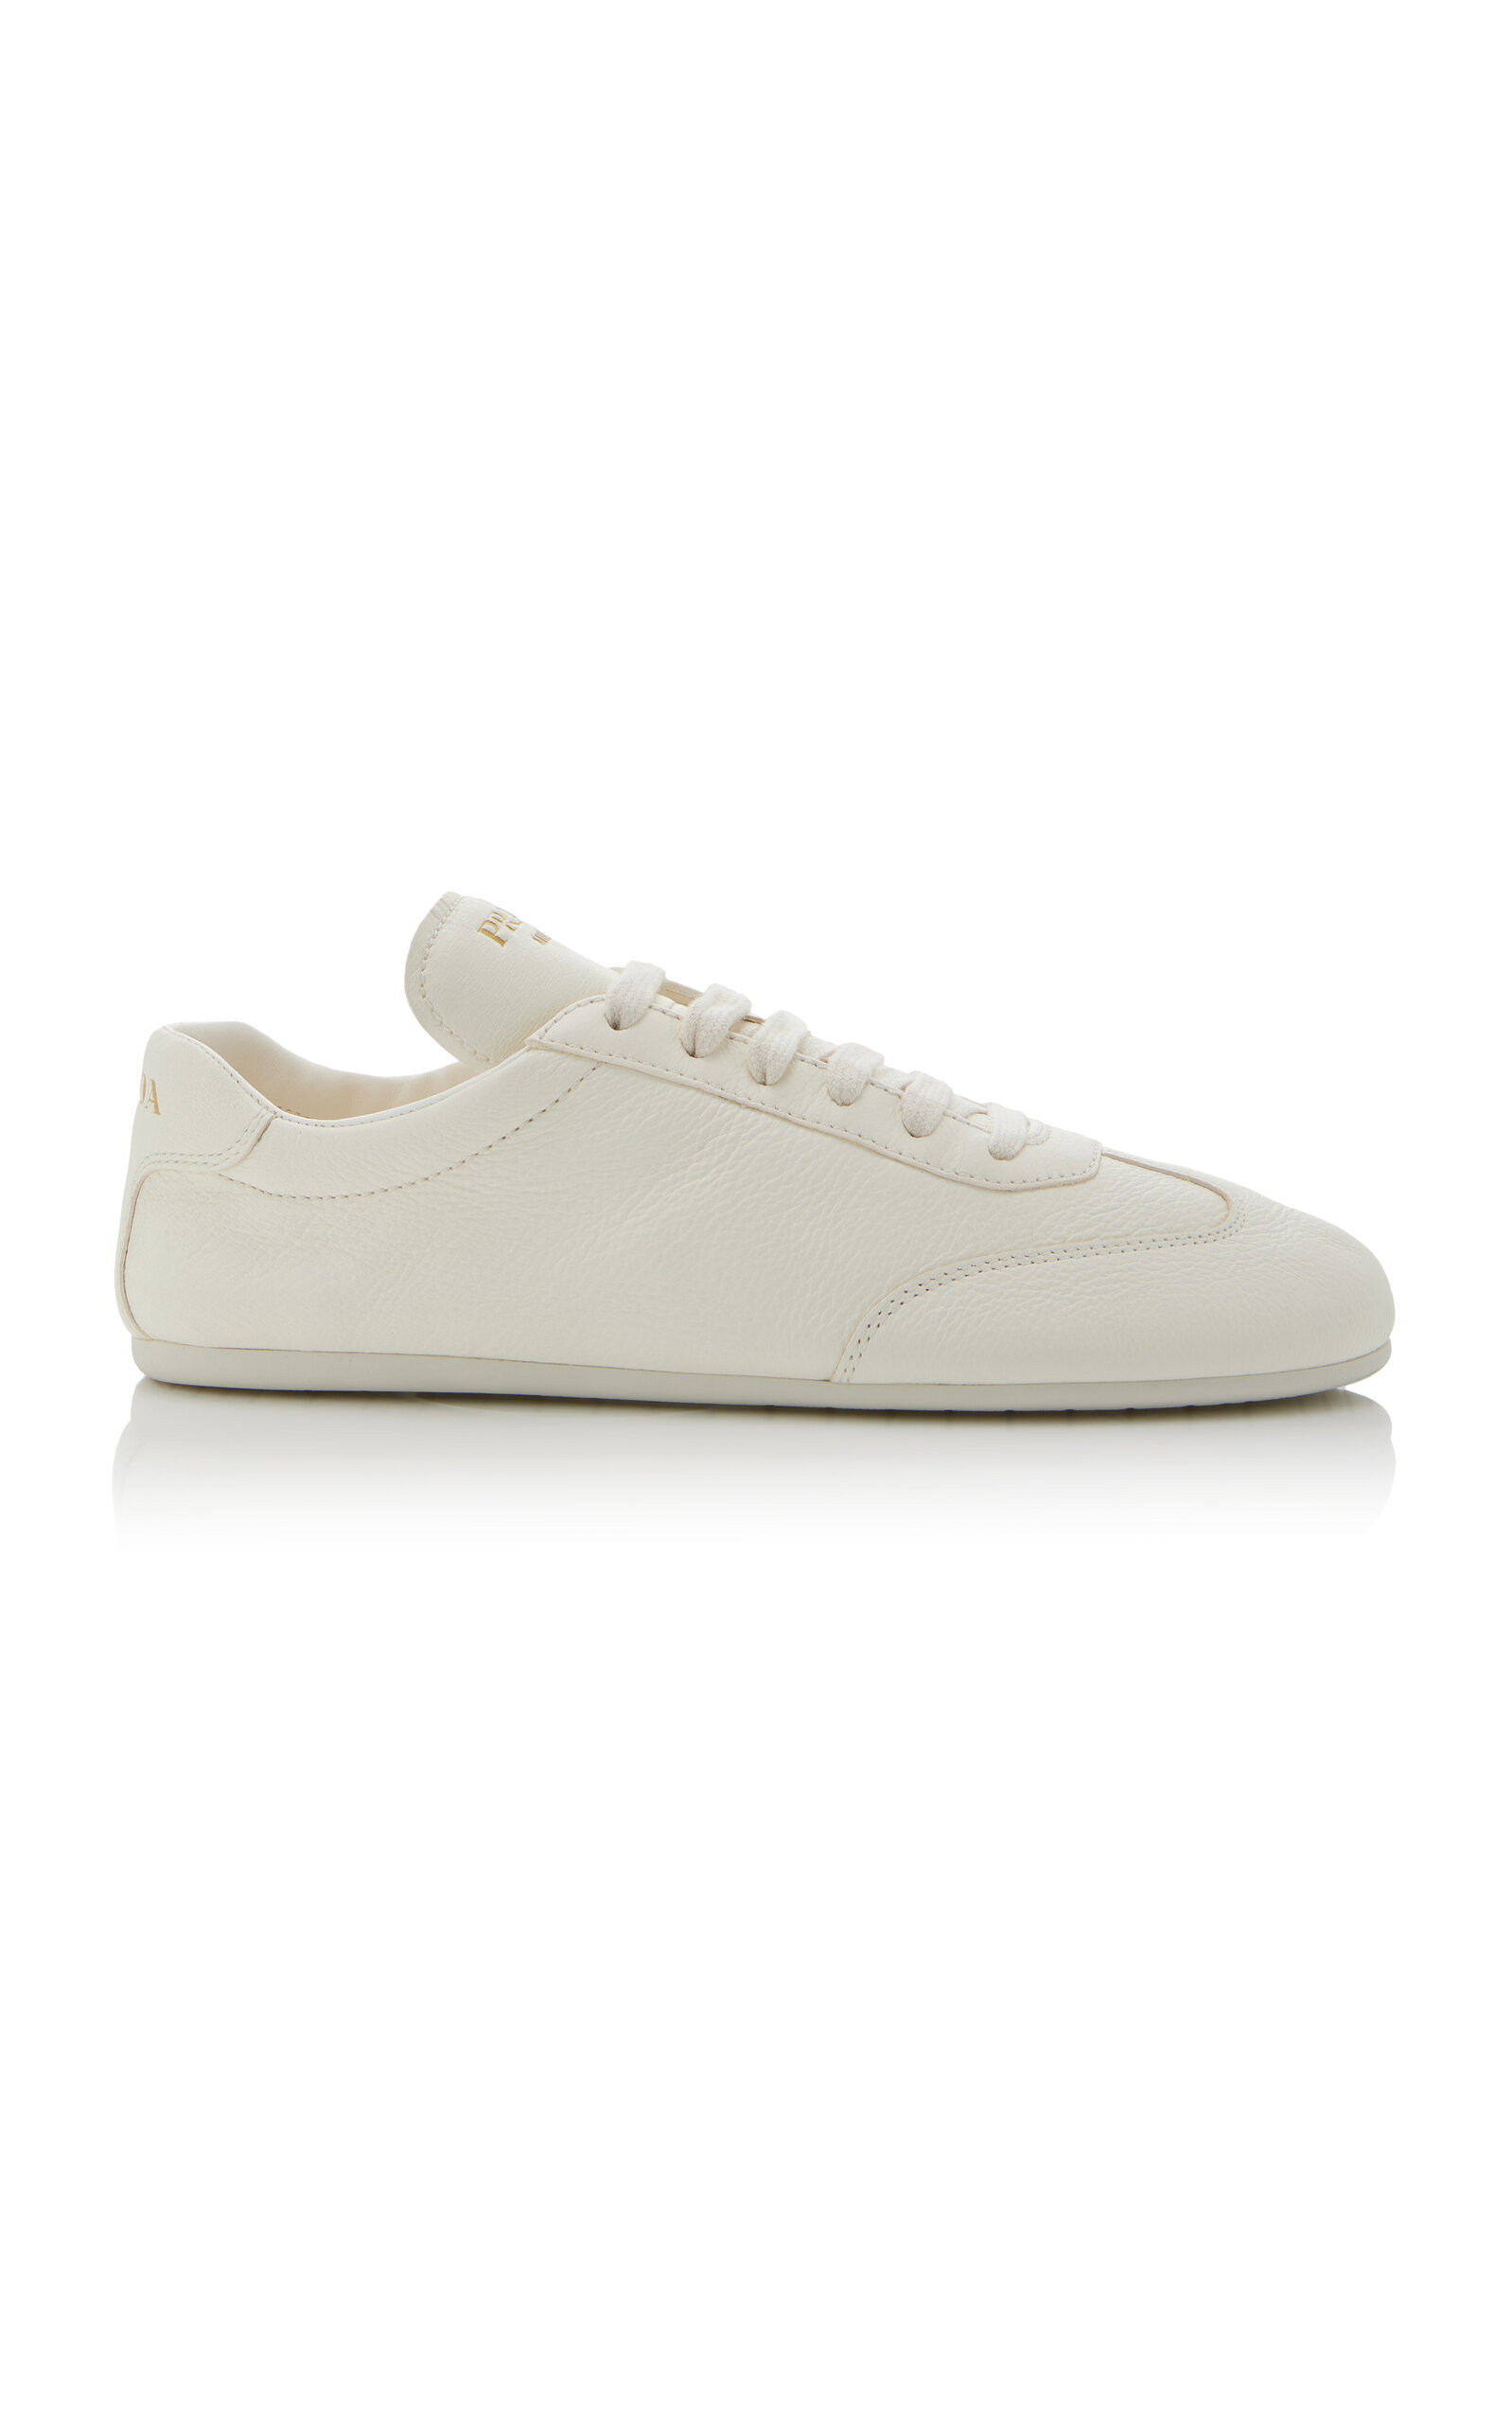 Prada - Leather Sneakers         - White - IT 36.5 - Moda Operandi